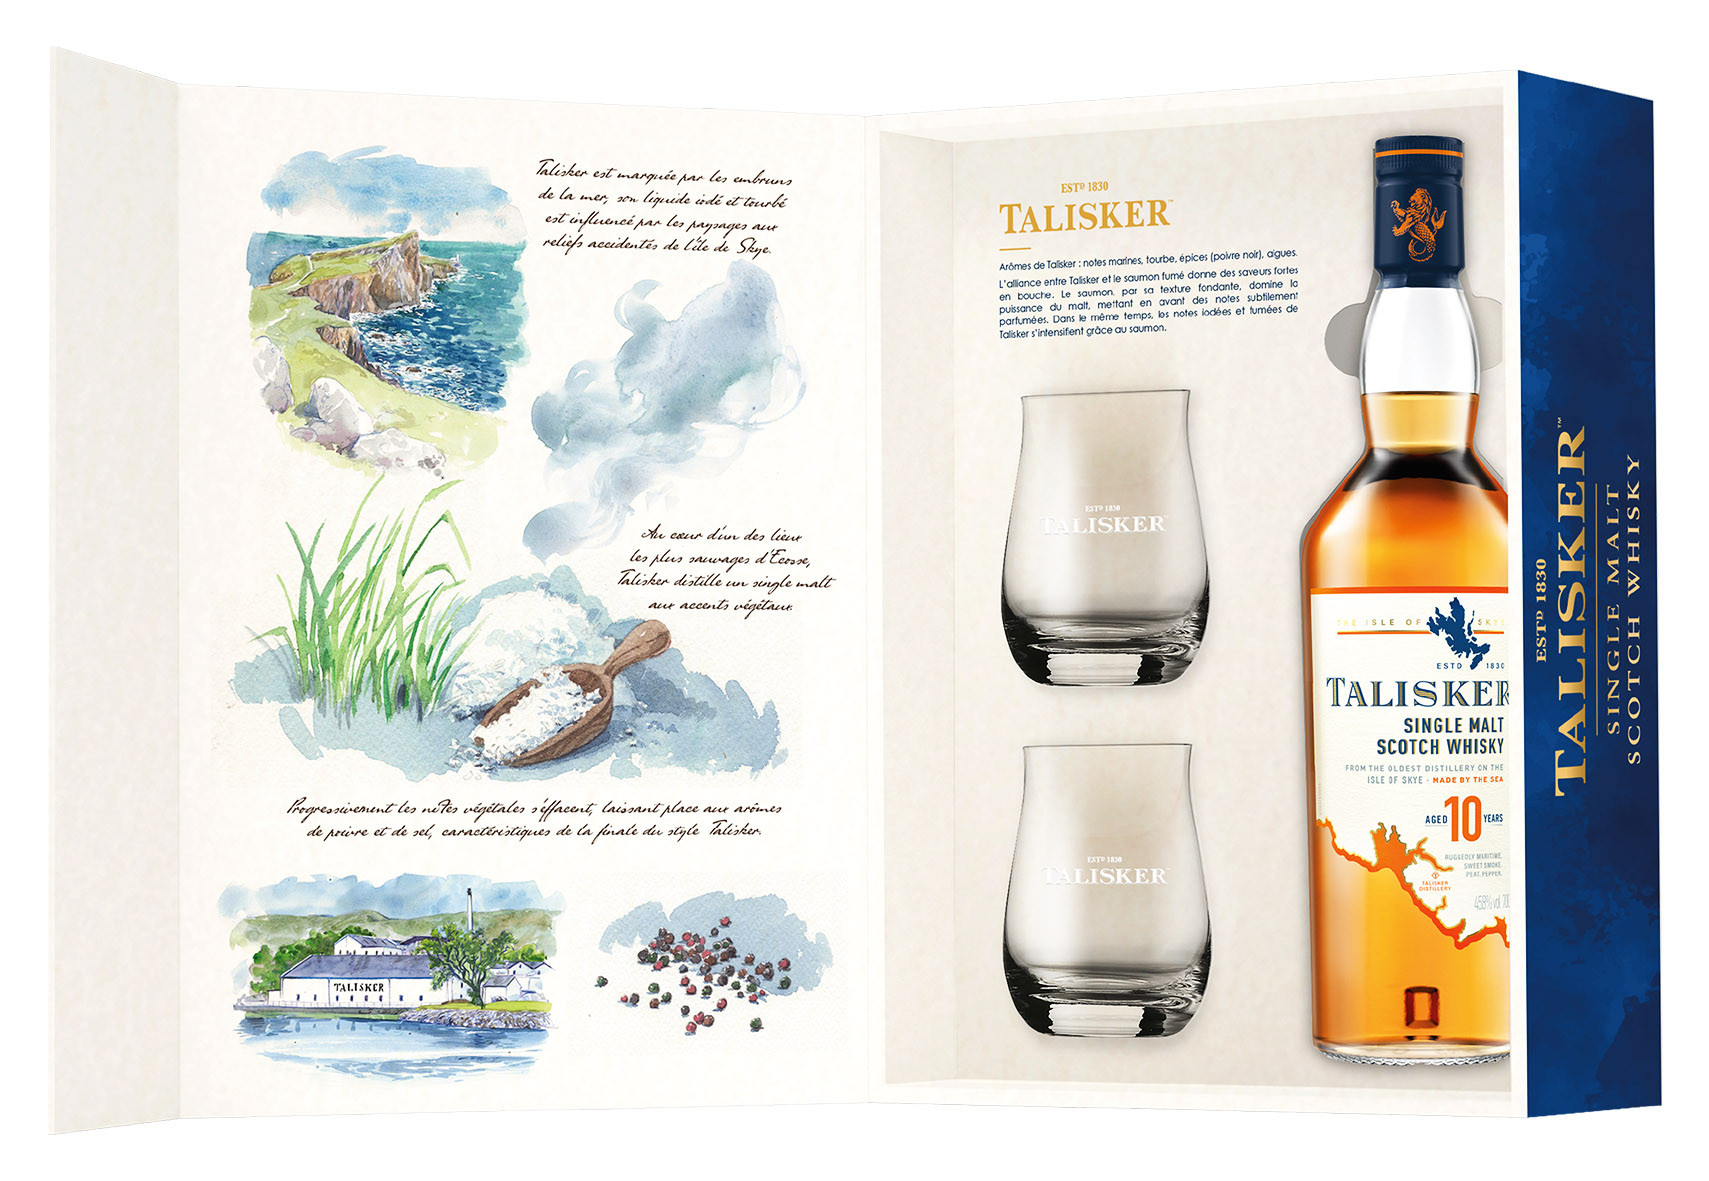 Whisky Talisker 10 ans Single Malt 70cl Coffret 2 verres Saveurs dEcosse www.odyssee-vins.com